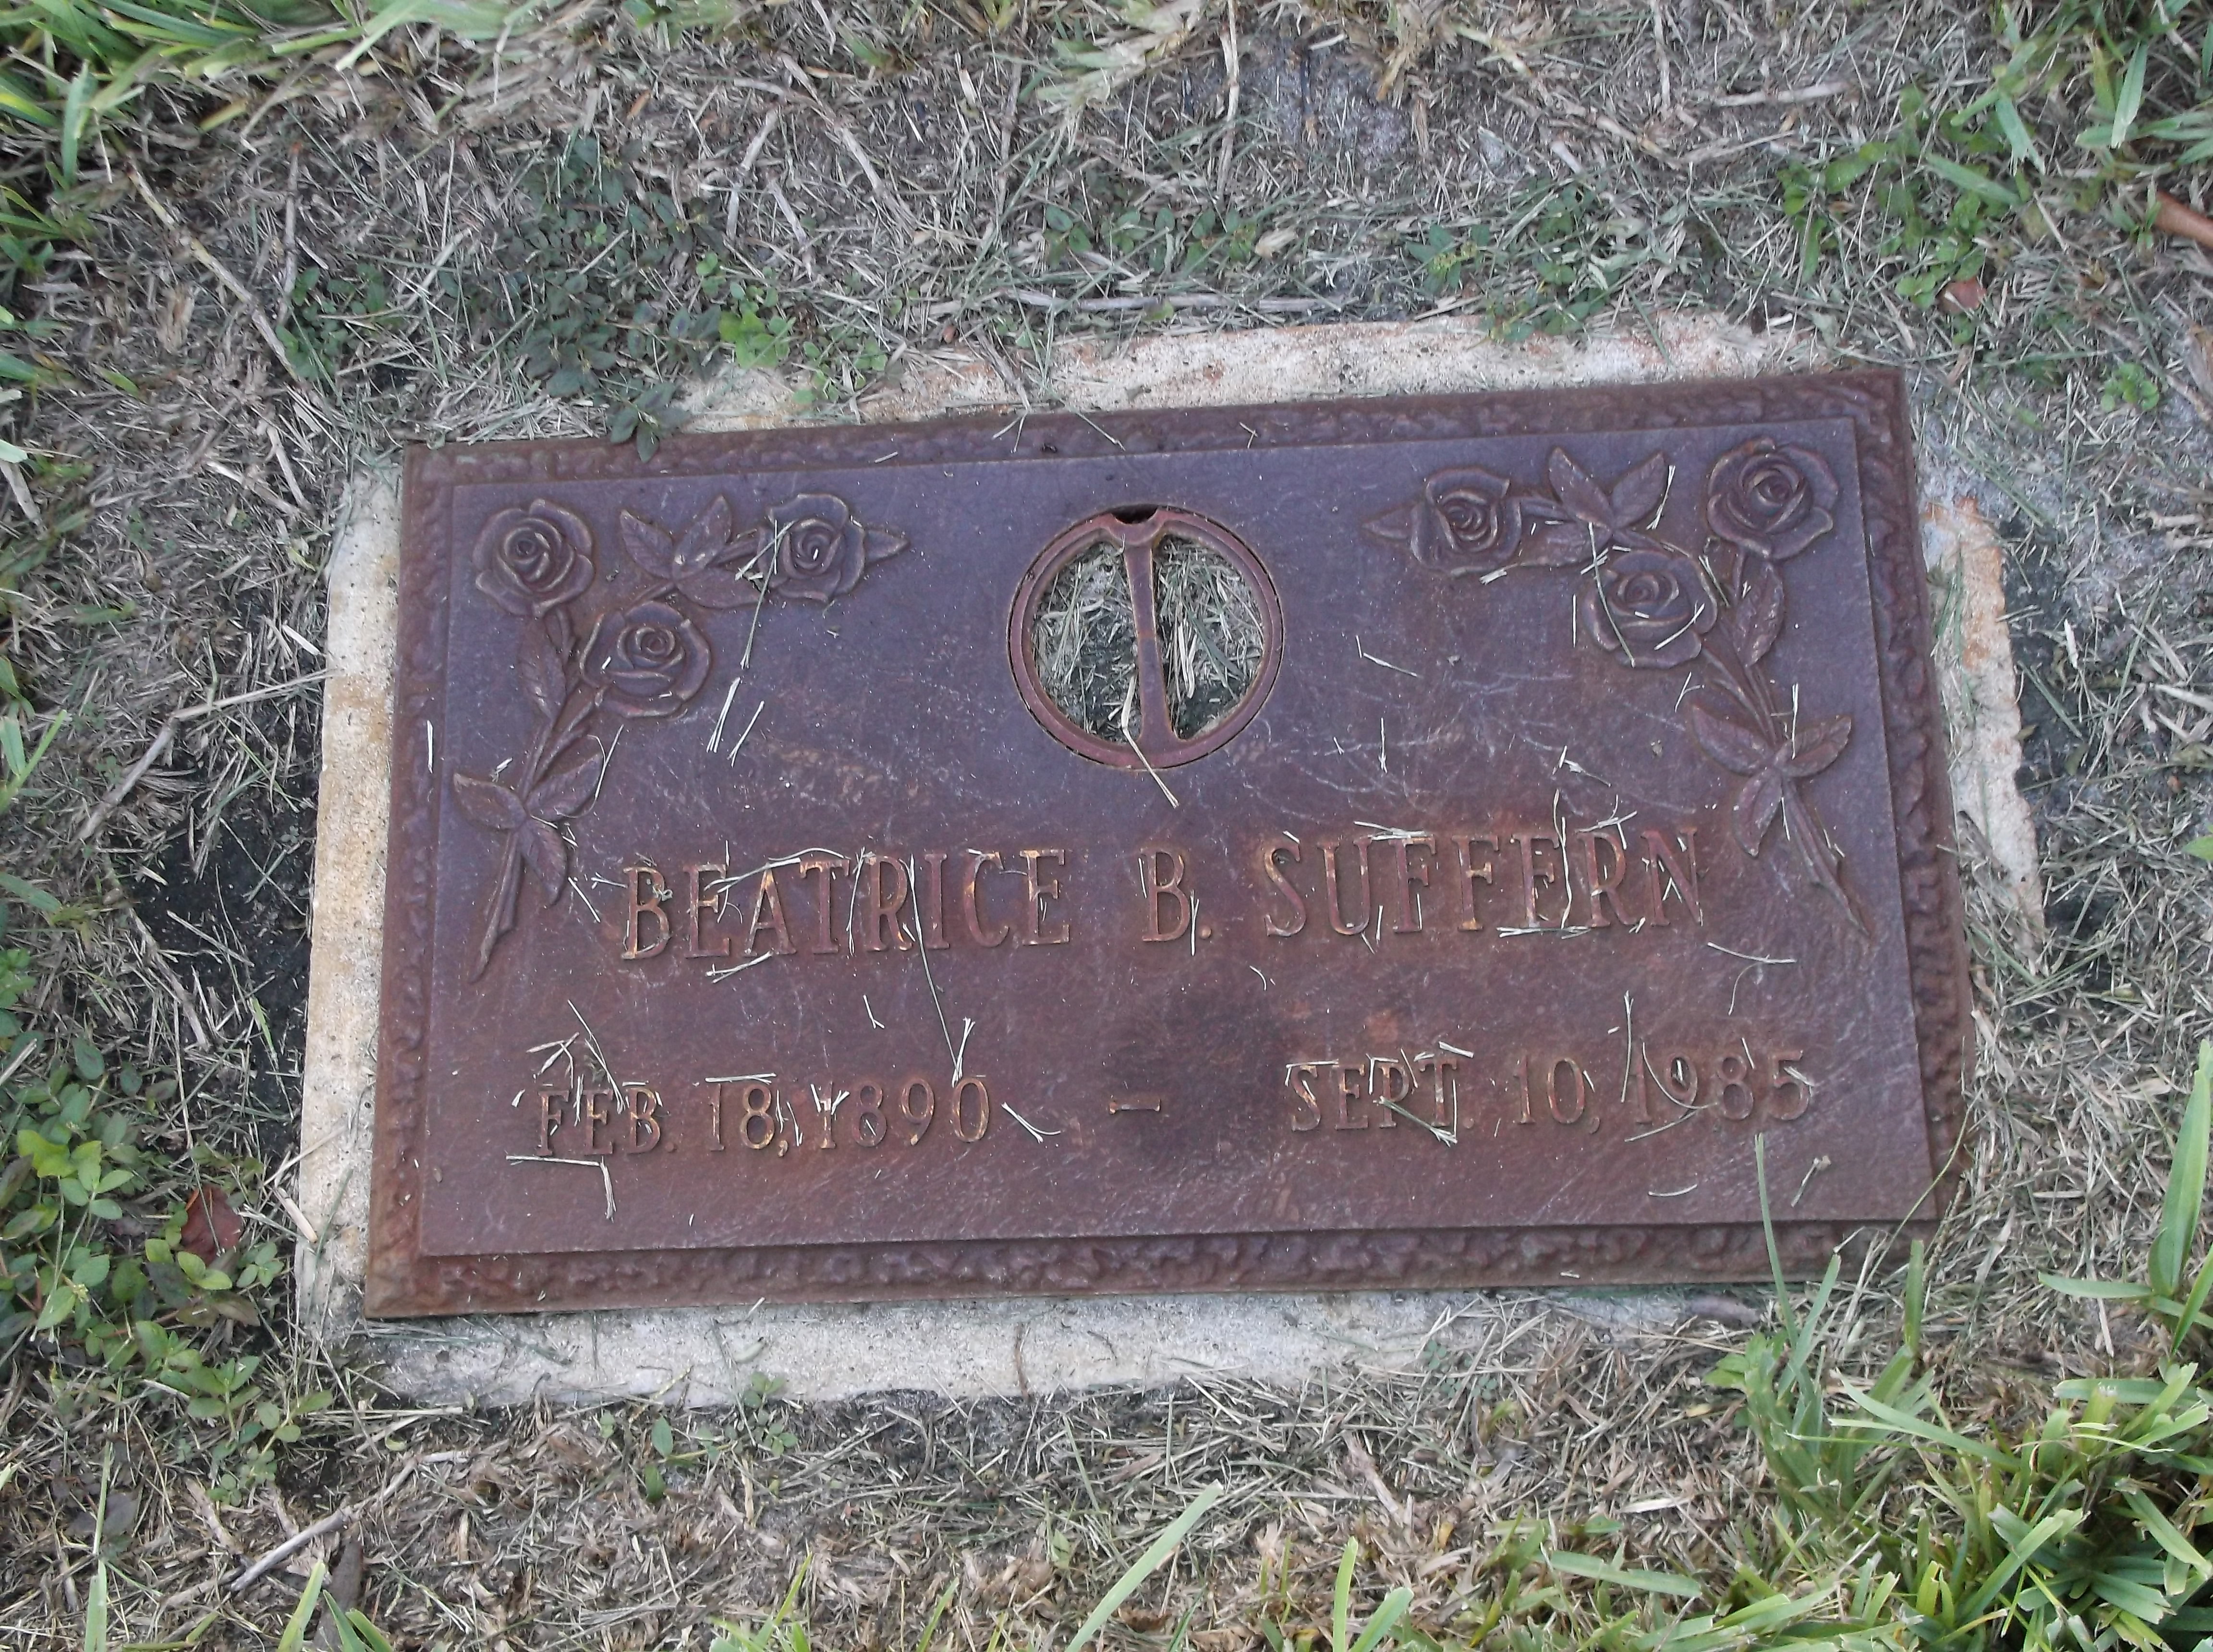 Beatrice B Suffern